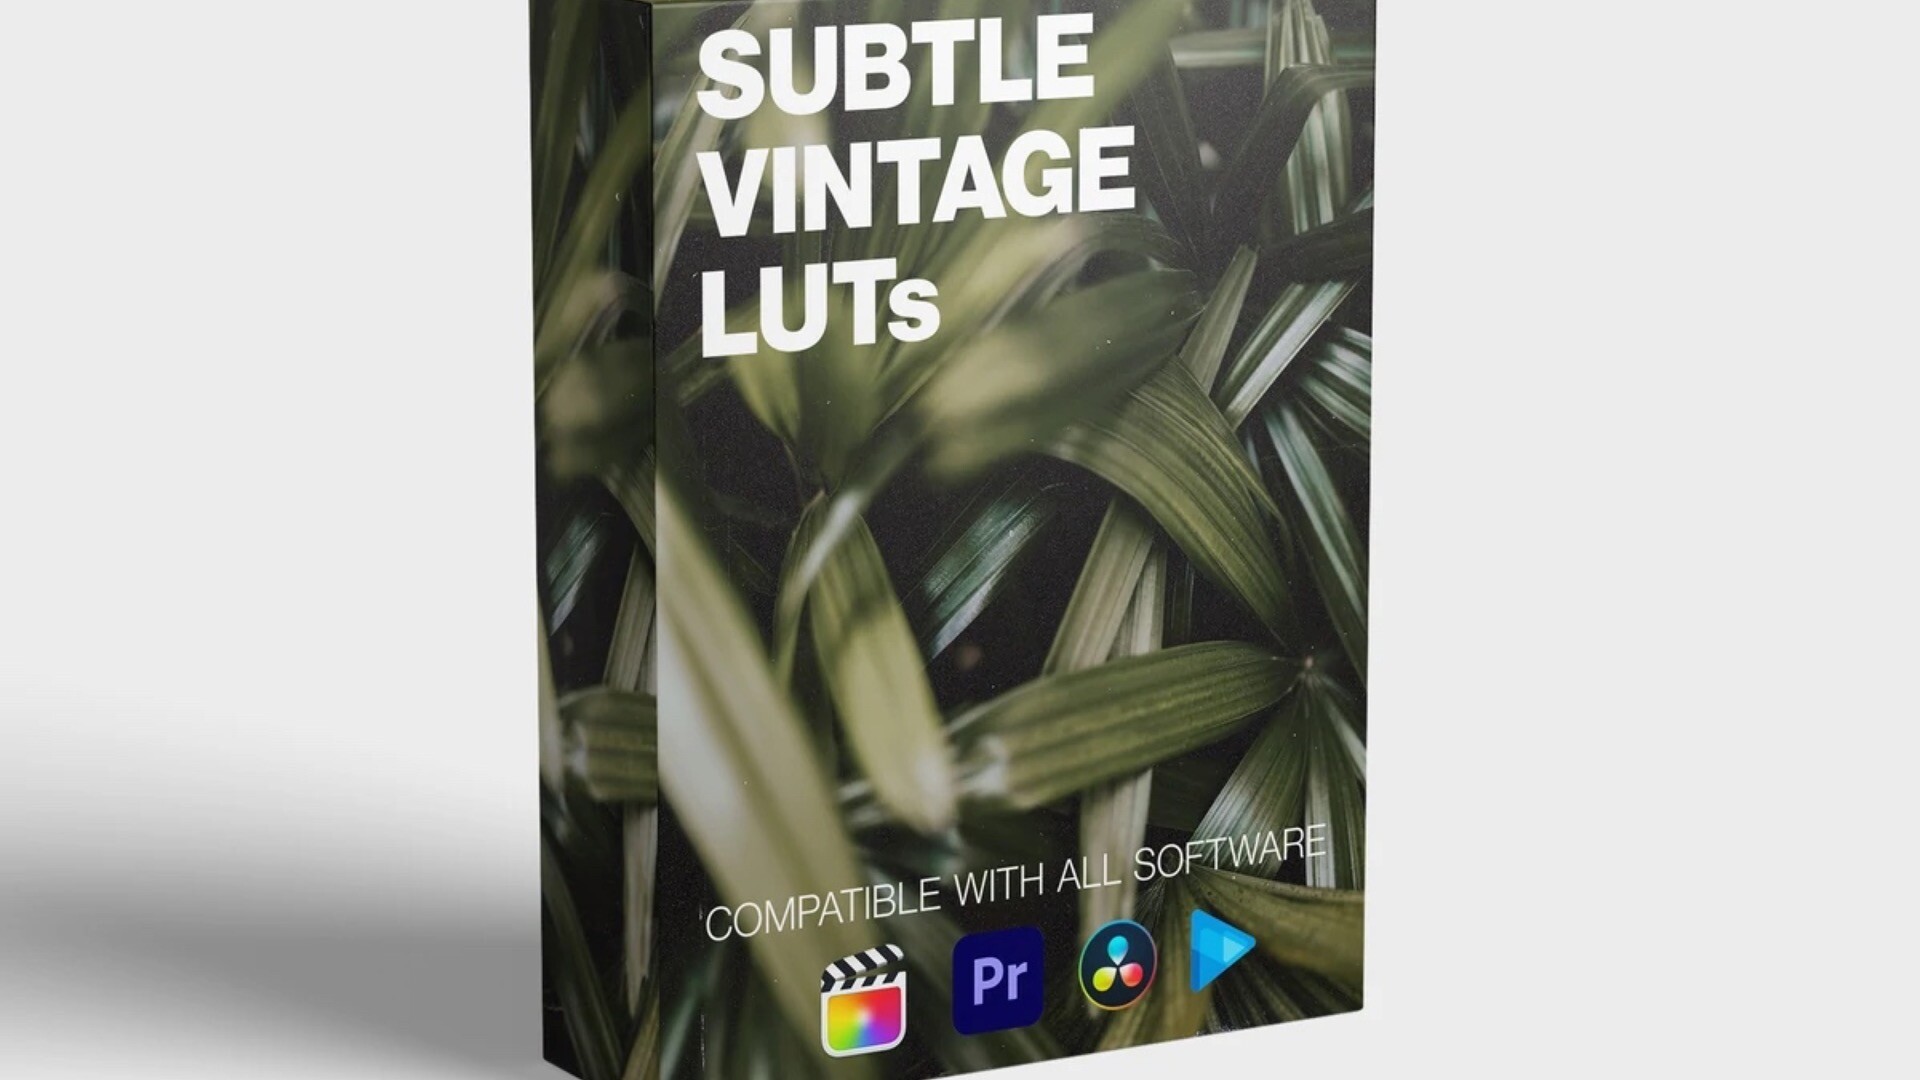 luts预设：Subtle Vintage LUT预设复合色彩调整处理滤镜